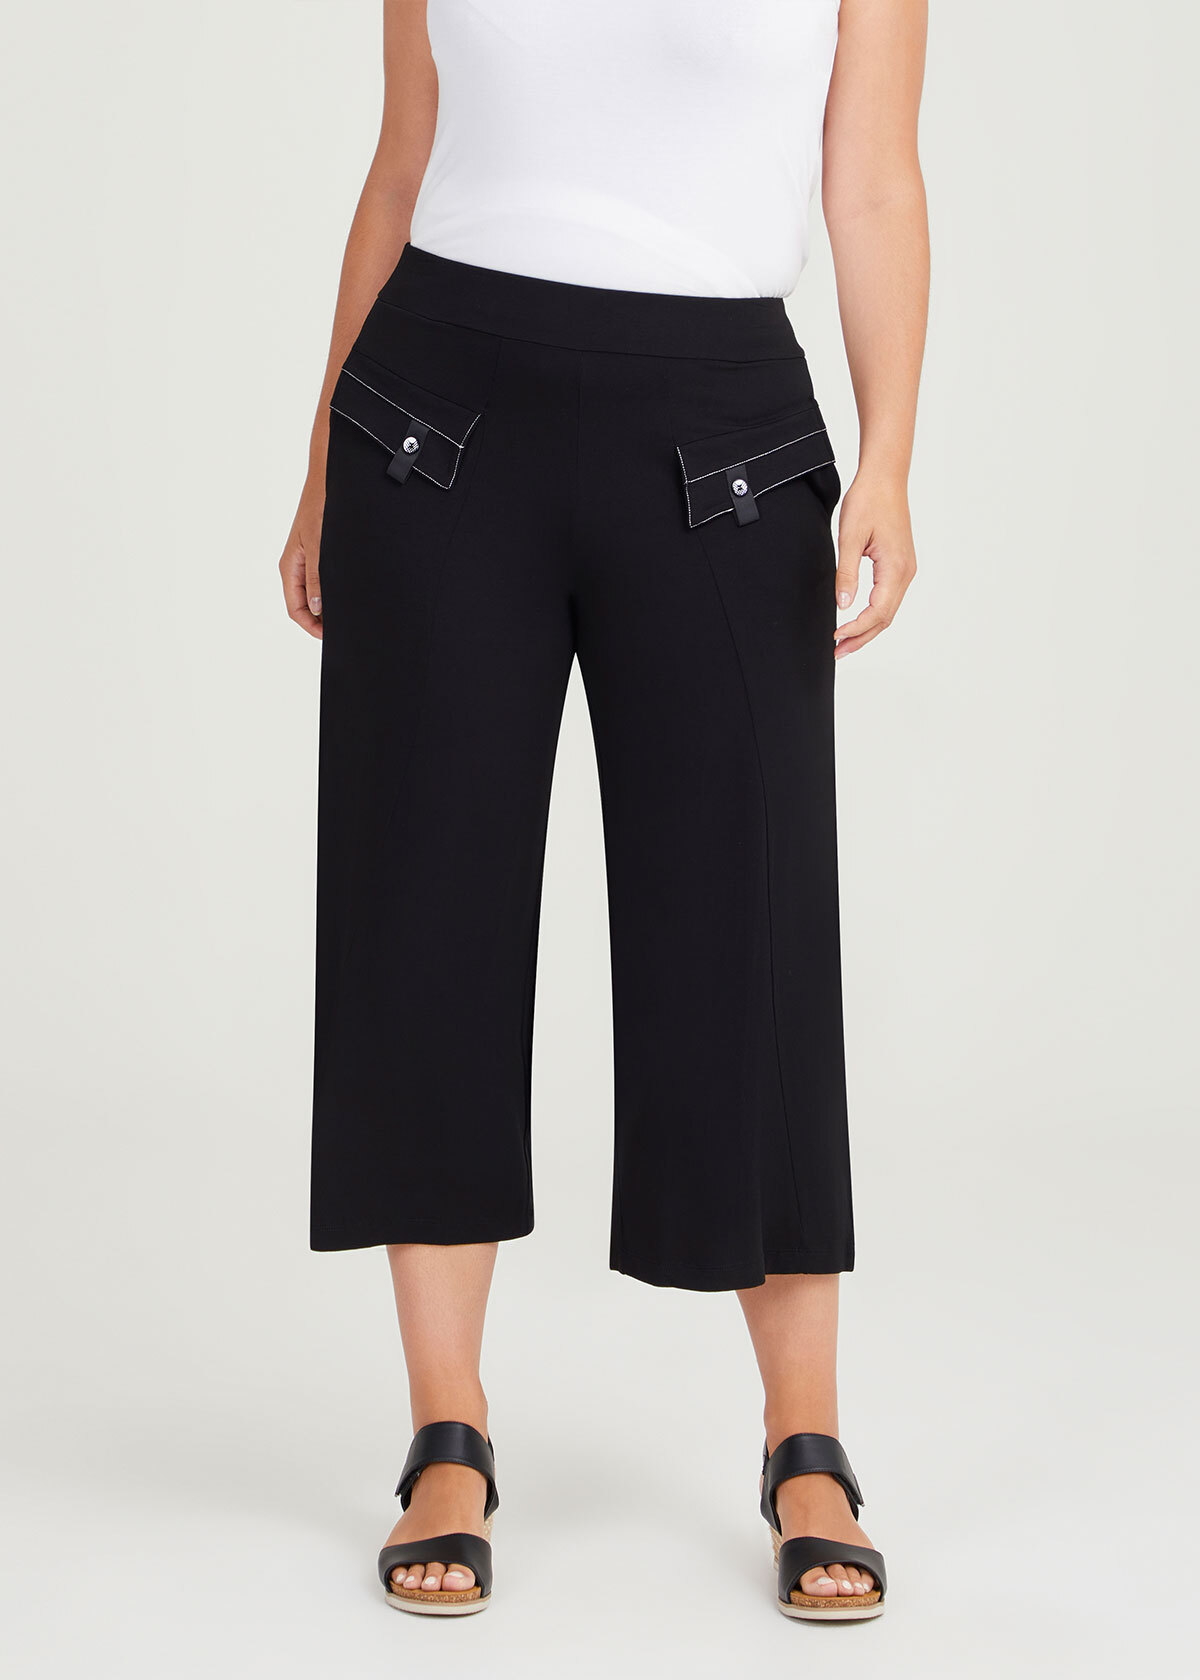 Shop Plus Size Natural Lena Crop Pant in Black | Sizes 12-30 | Taking ...